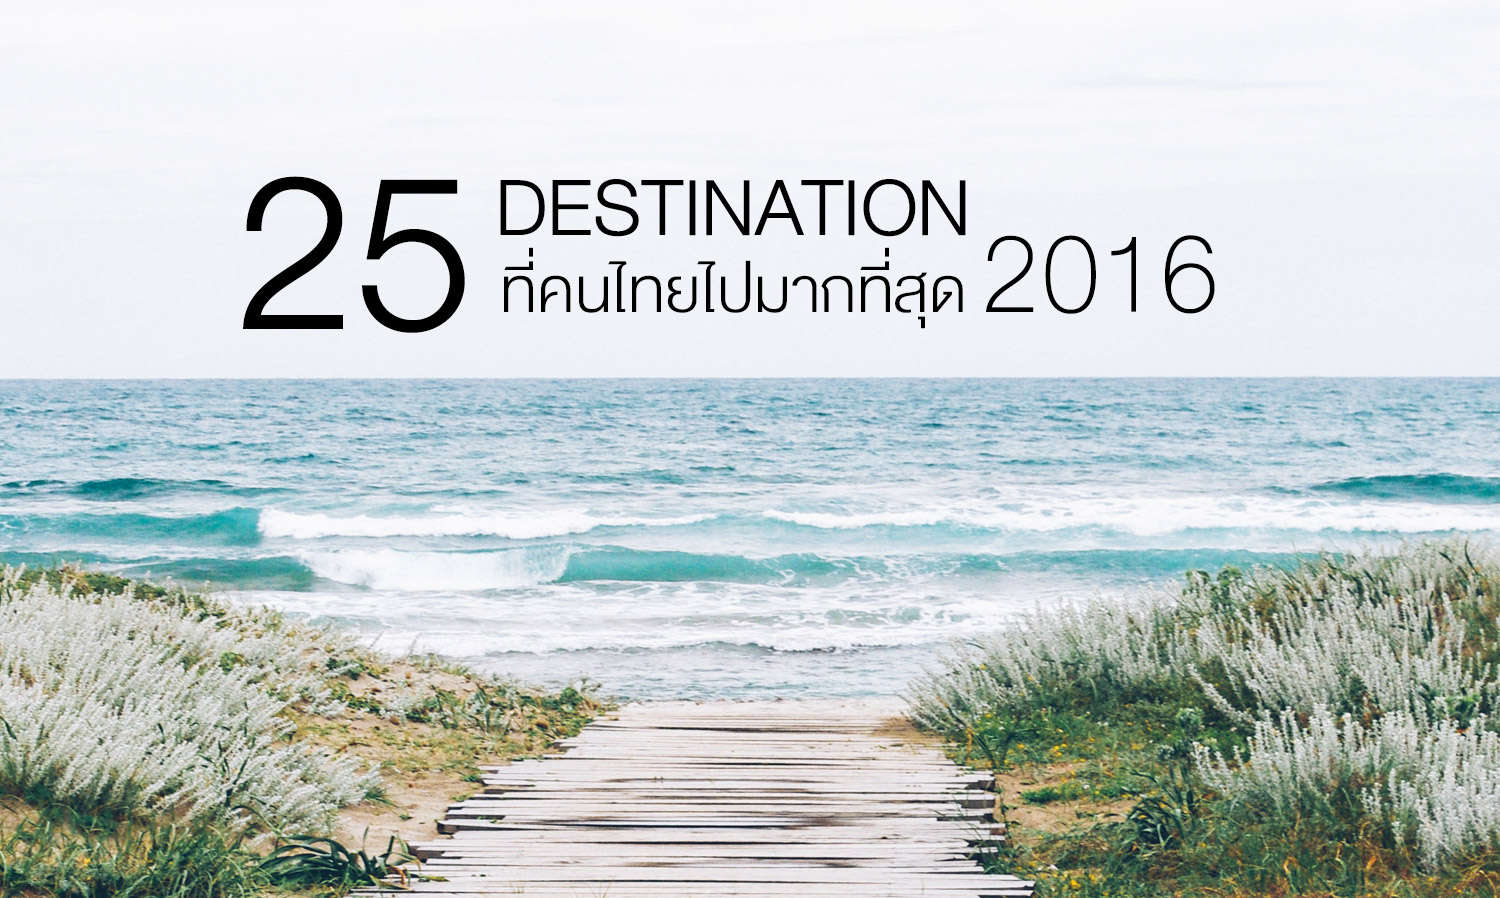 25 Destination ที่คนไทยไปมากที่สุด 2016 